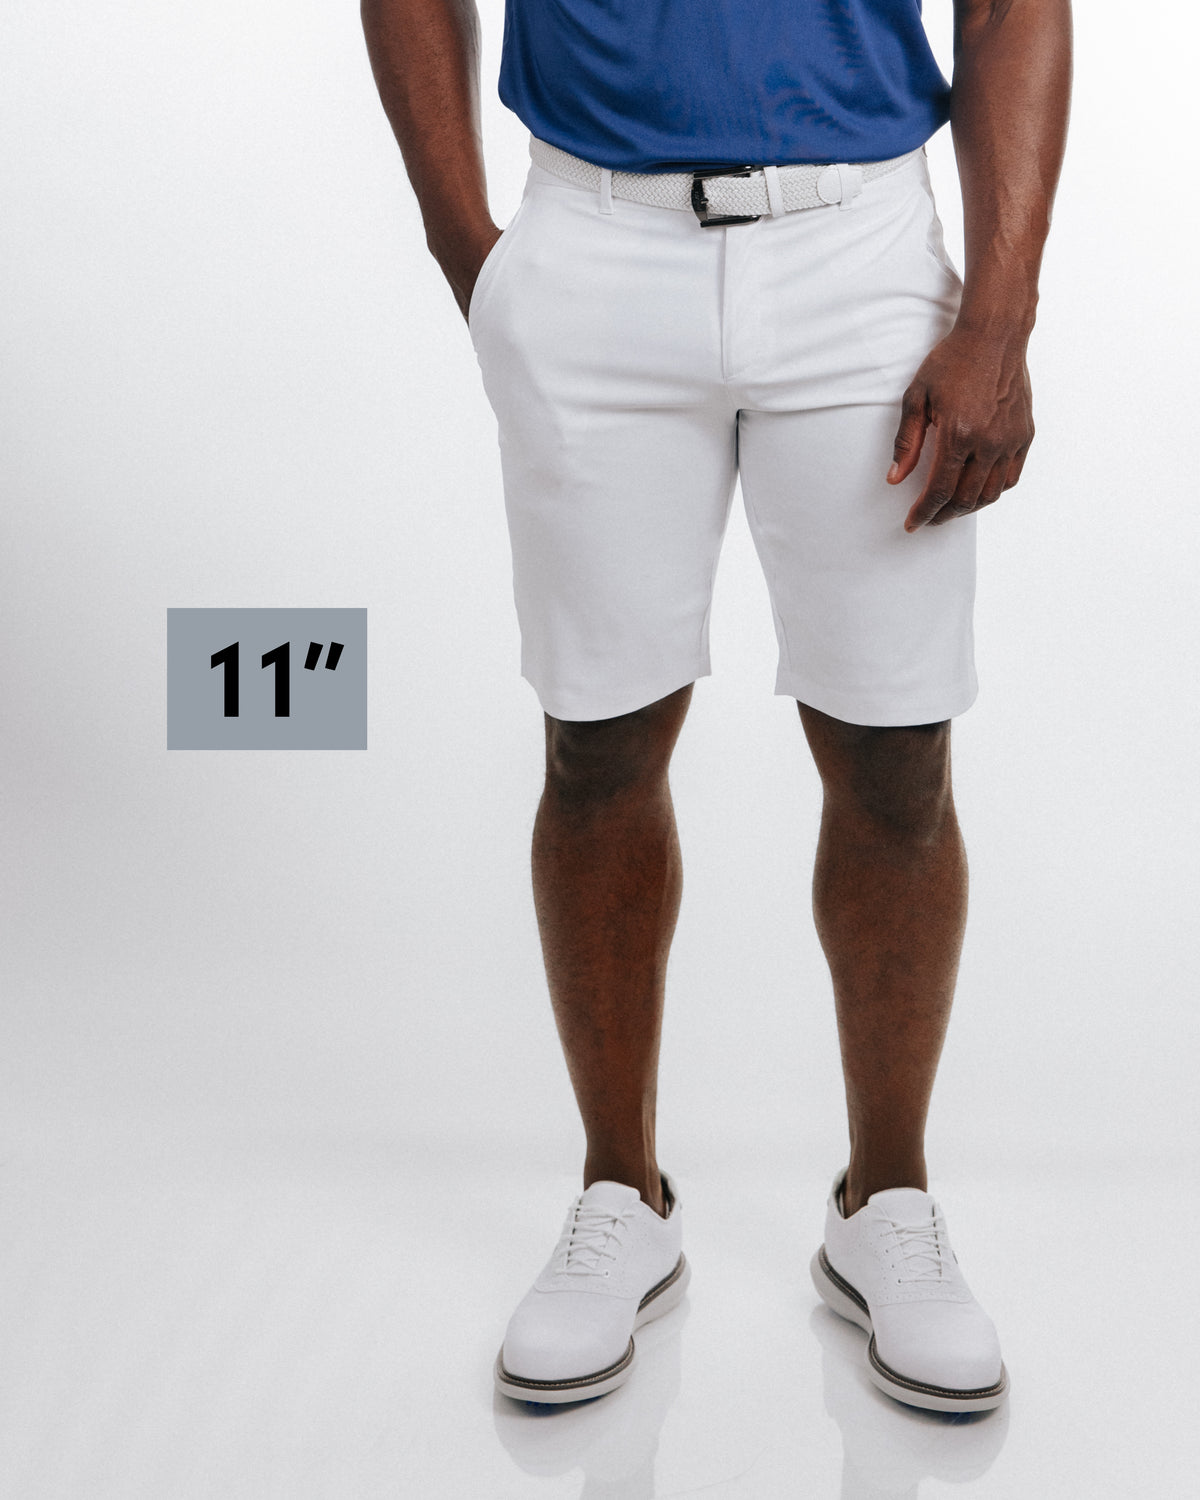 Primo White Shorts - 7, 9, 11 – Primo Golf Apparel